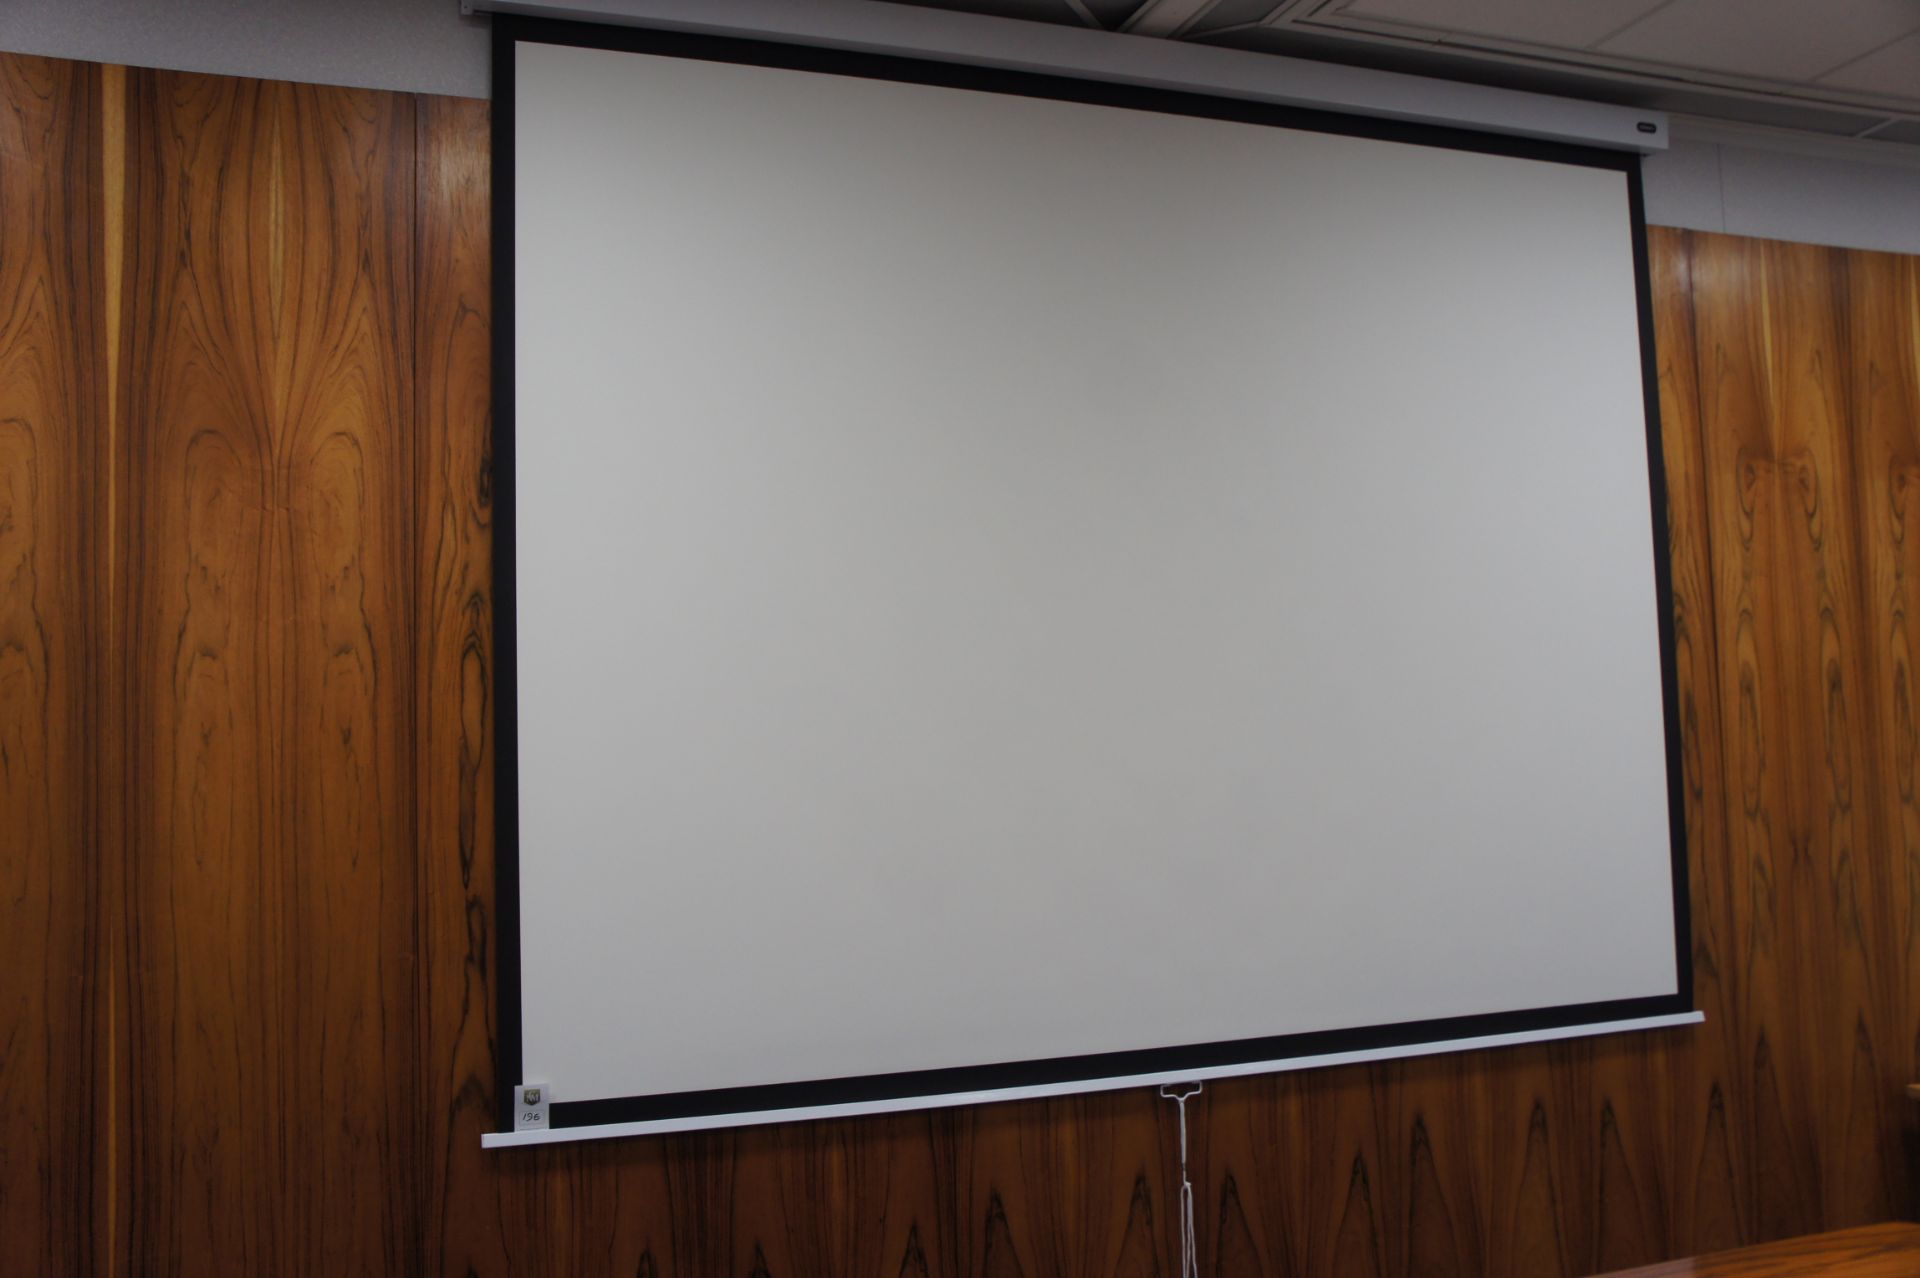 Rollaway projector screen - Image 2 of 2